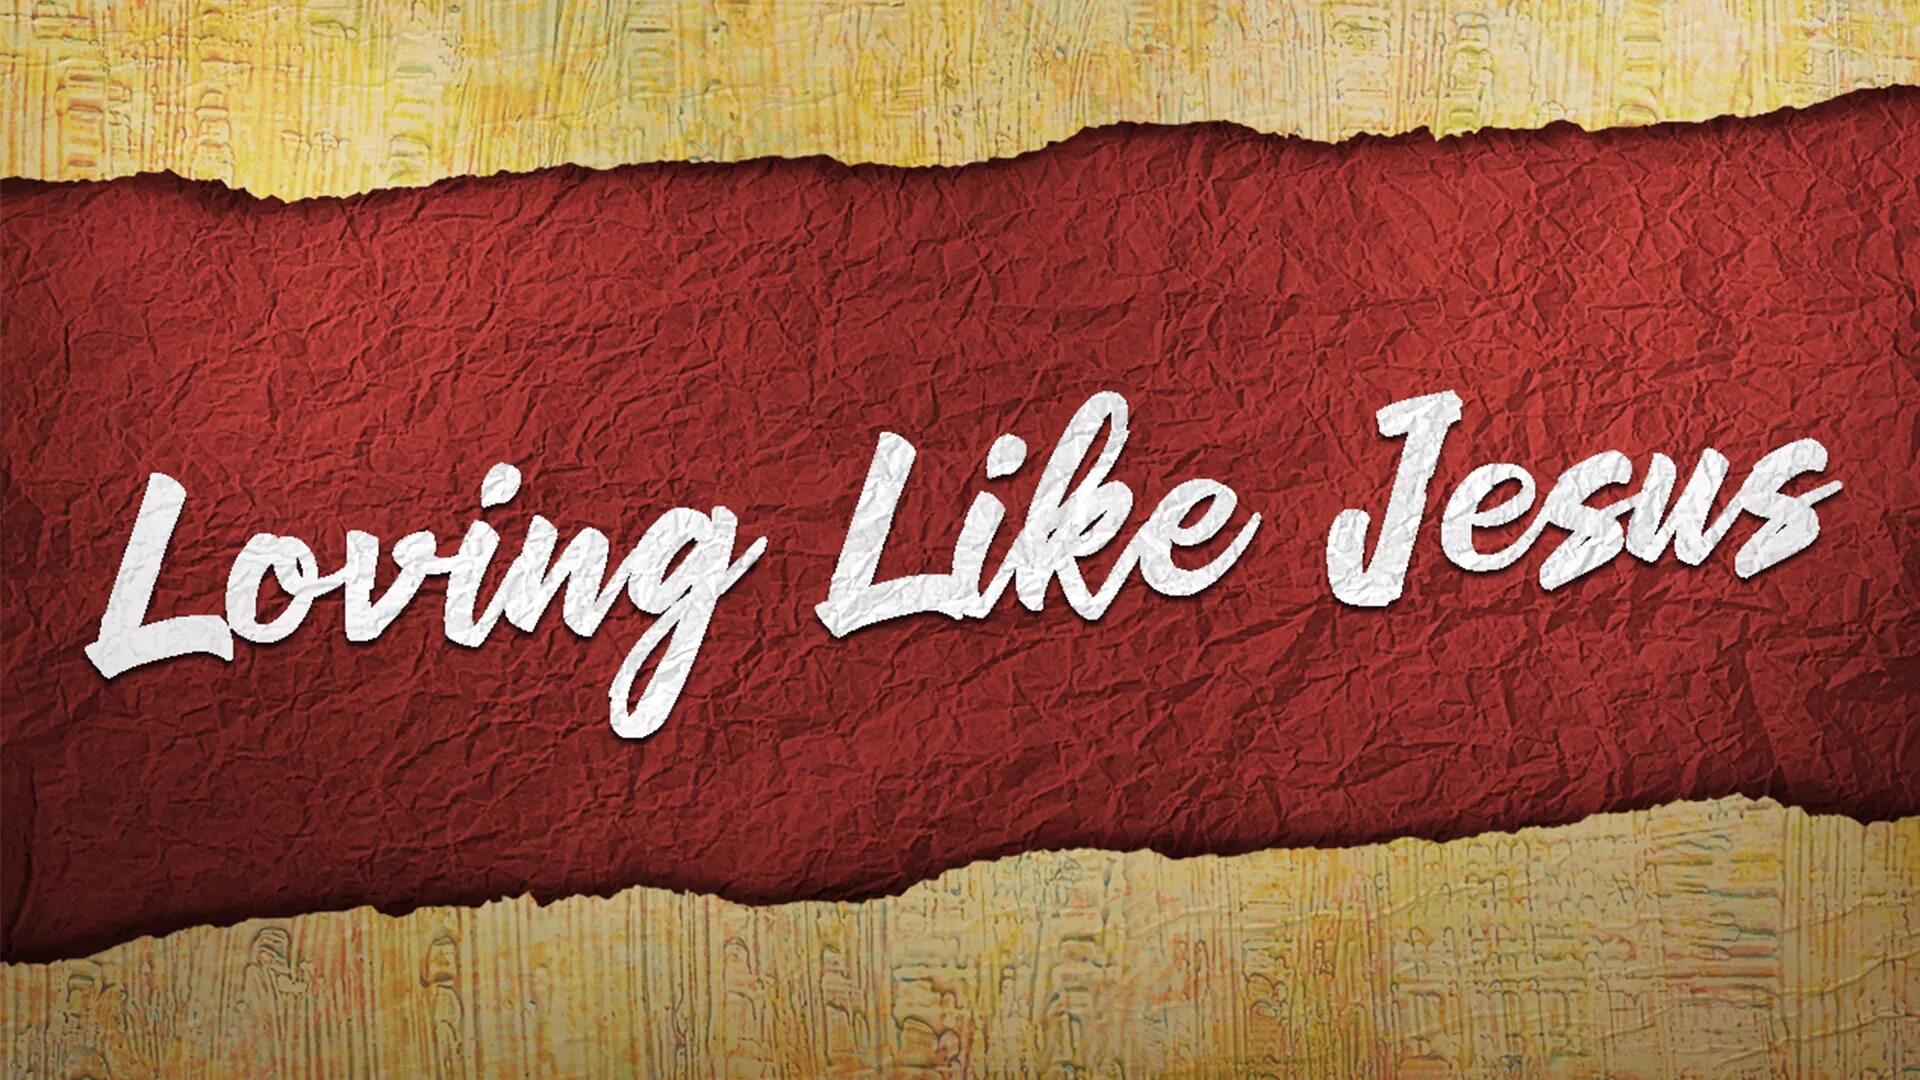 Love like Jesus. Jesus like. Sunday service. Love like great